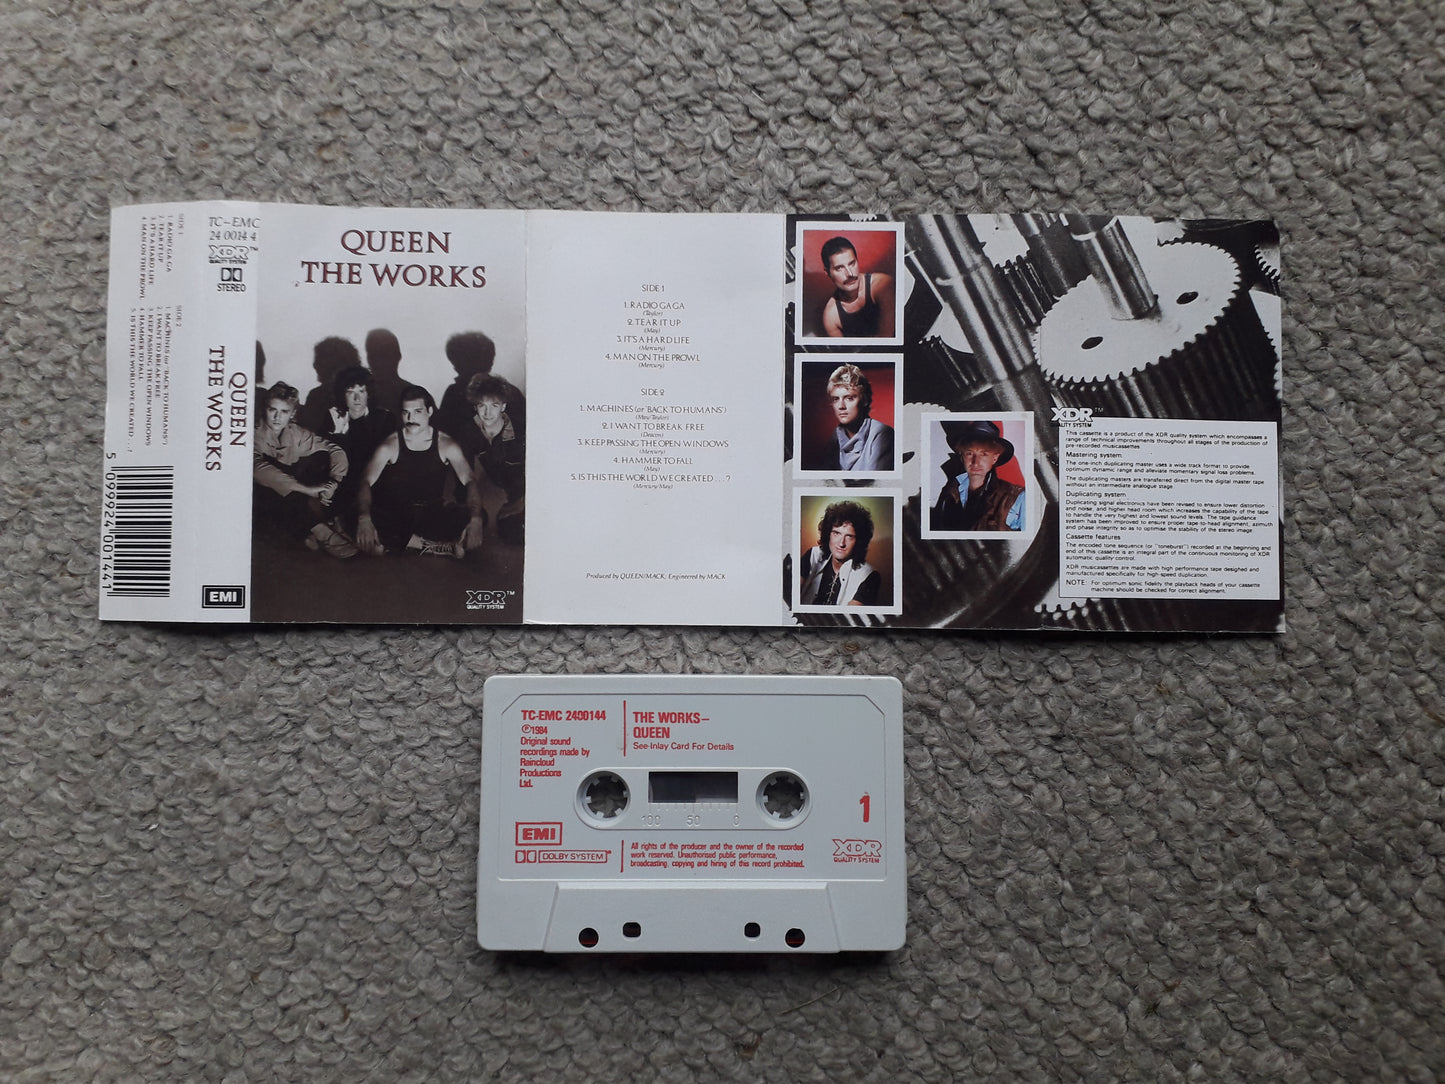 Queen-The Works Cassette (TC-EMC 24 0014 4)